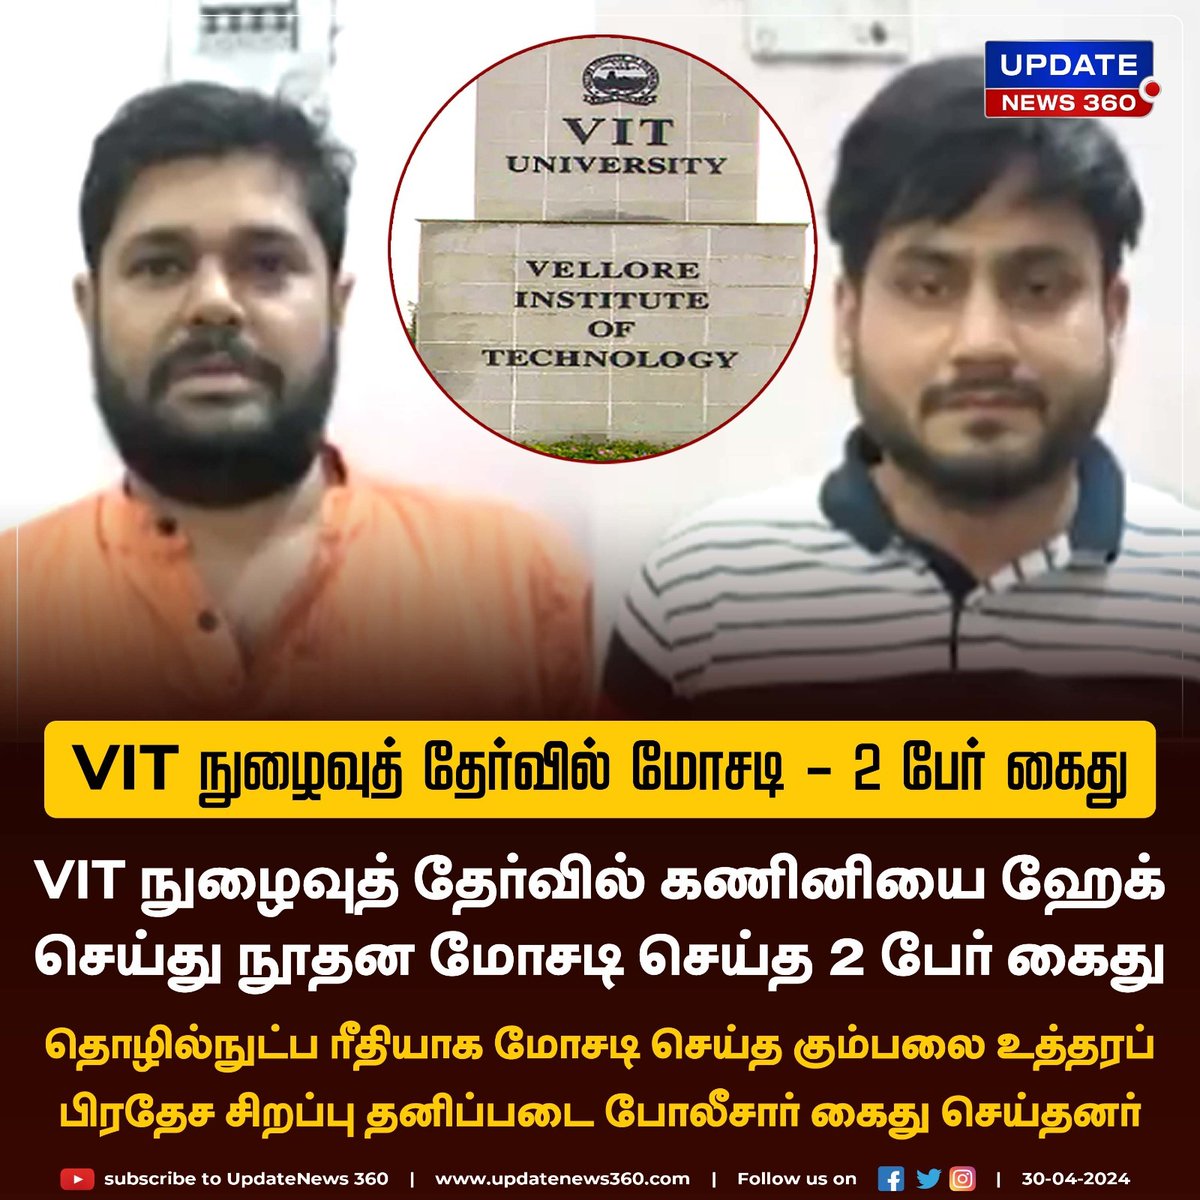 VIT நுழைவுத் தேர்வில் கணினியை ஹேக் செய்து நூதன மோசடி செய்த 2 பேர் கைது

#UpdateNews | #VIT | #Vituniversity | #EntranceExam | #Arrest | #TamilNews | #Updatenews360